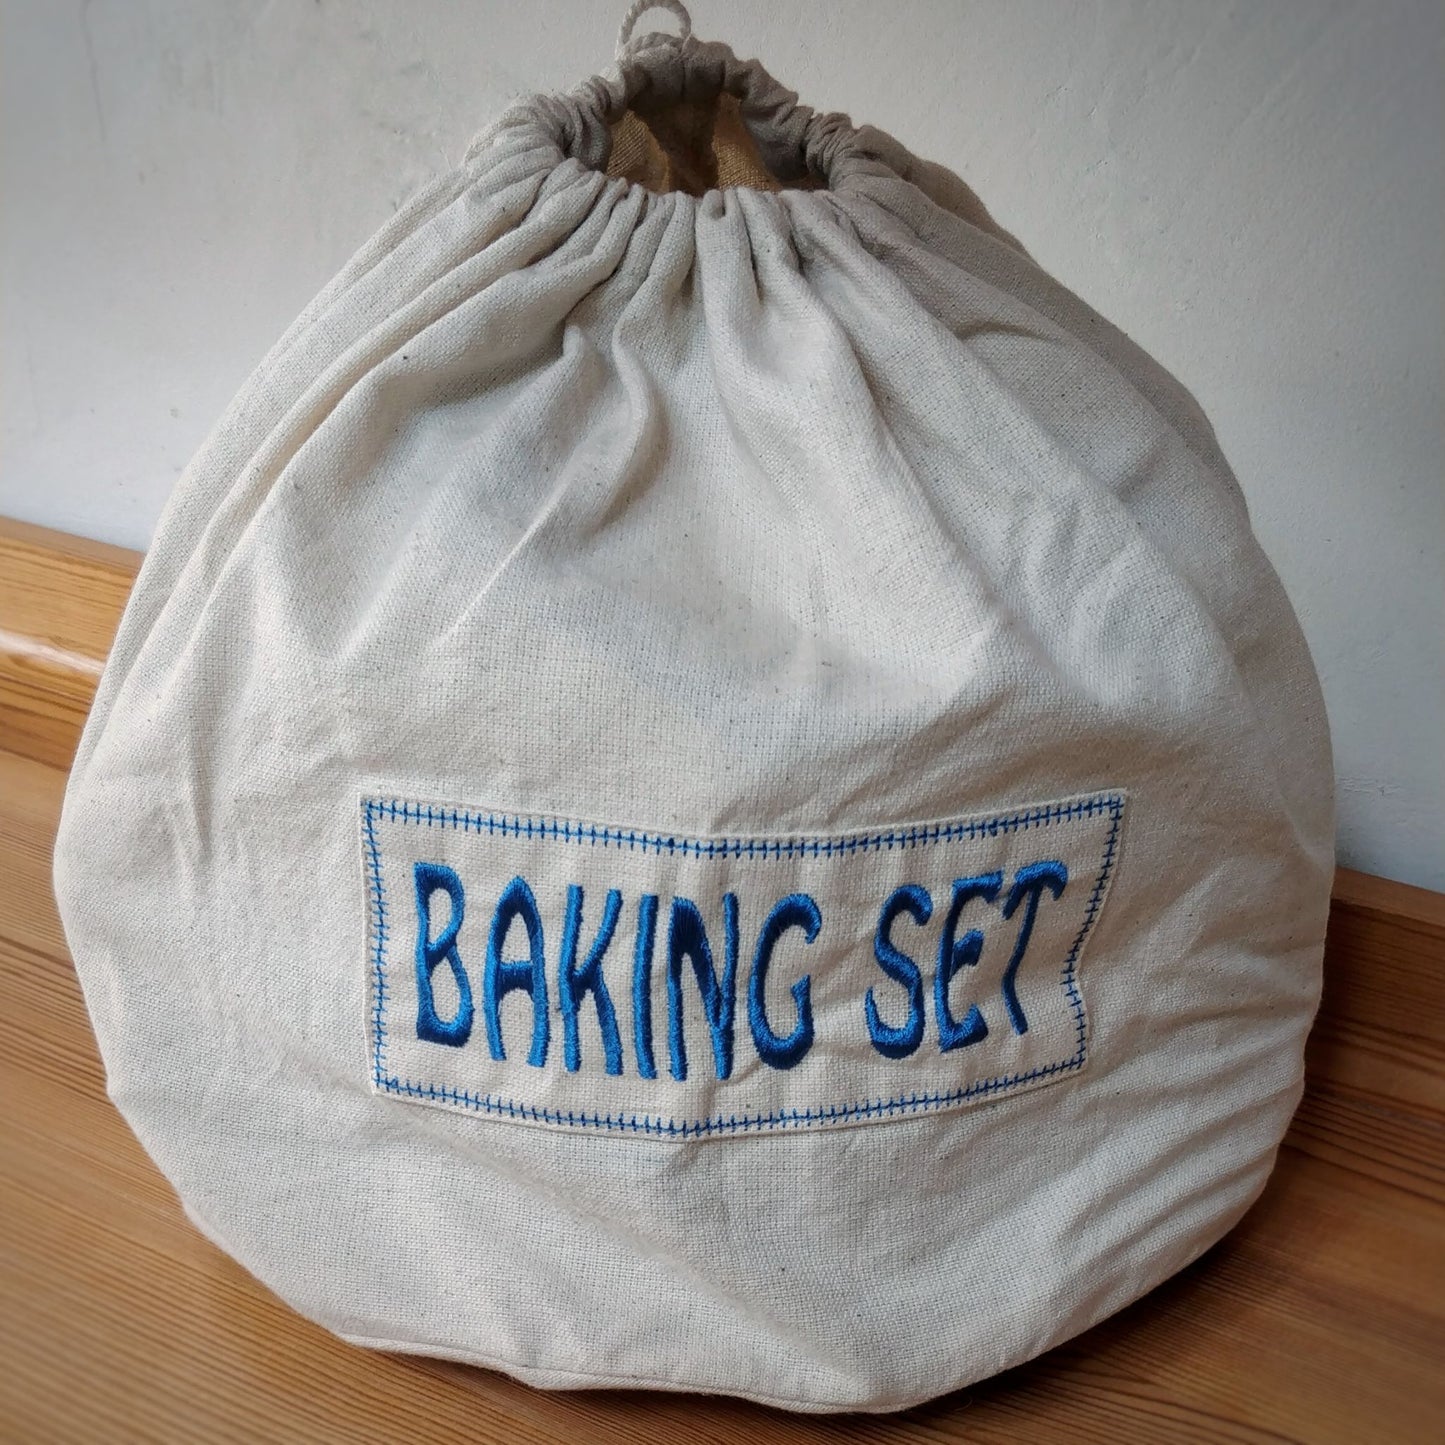 Toy Baking Set in Fair Trade Cotton in bag